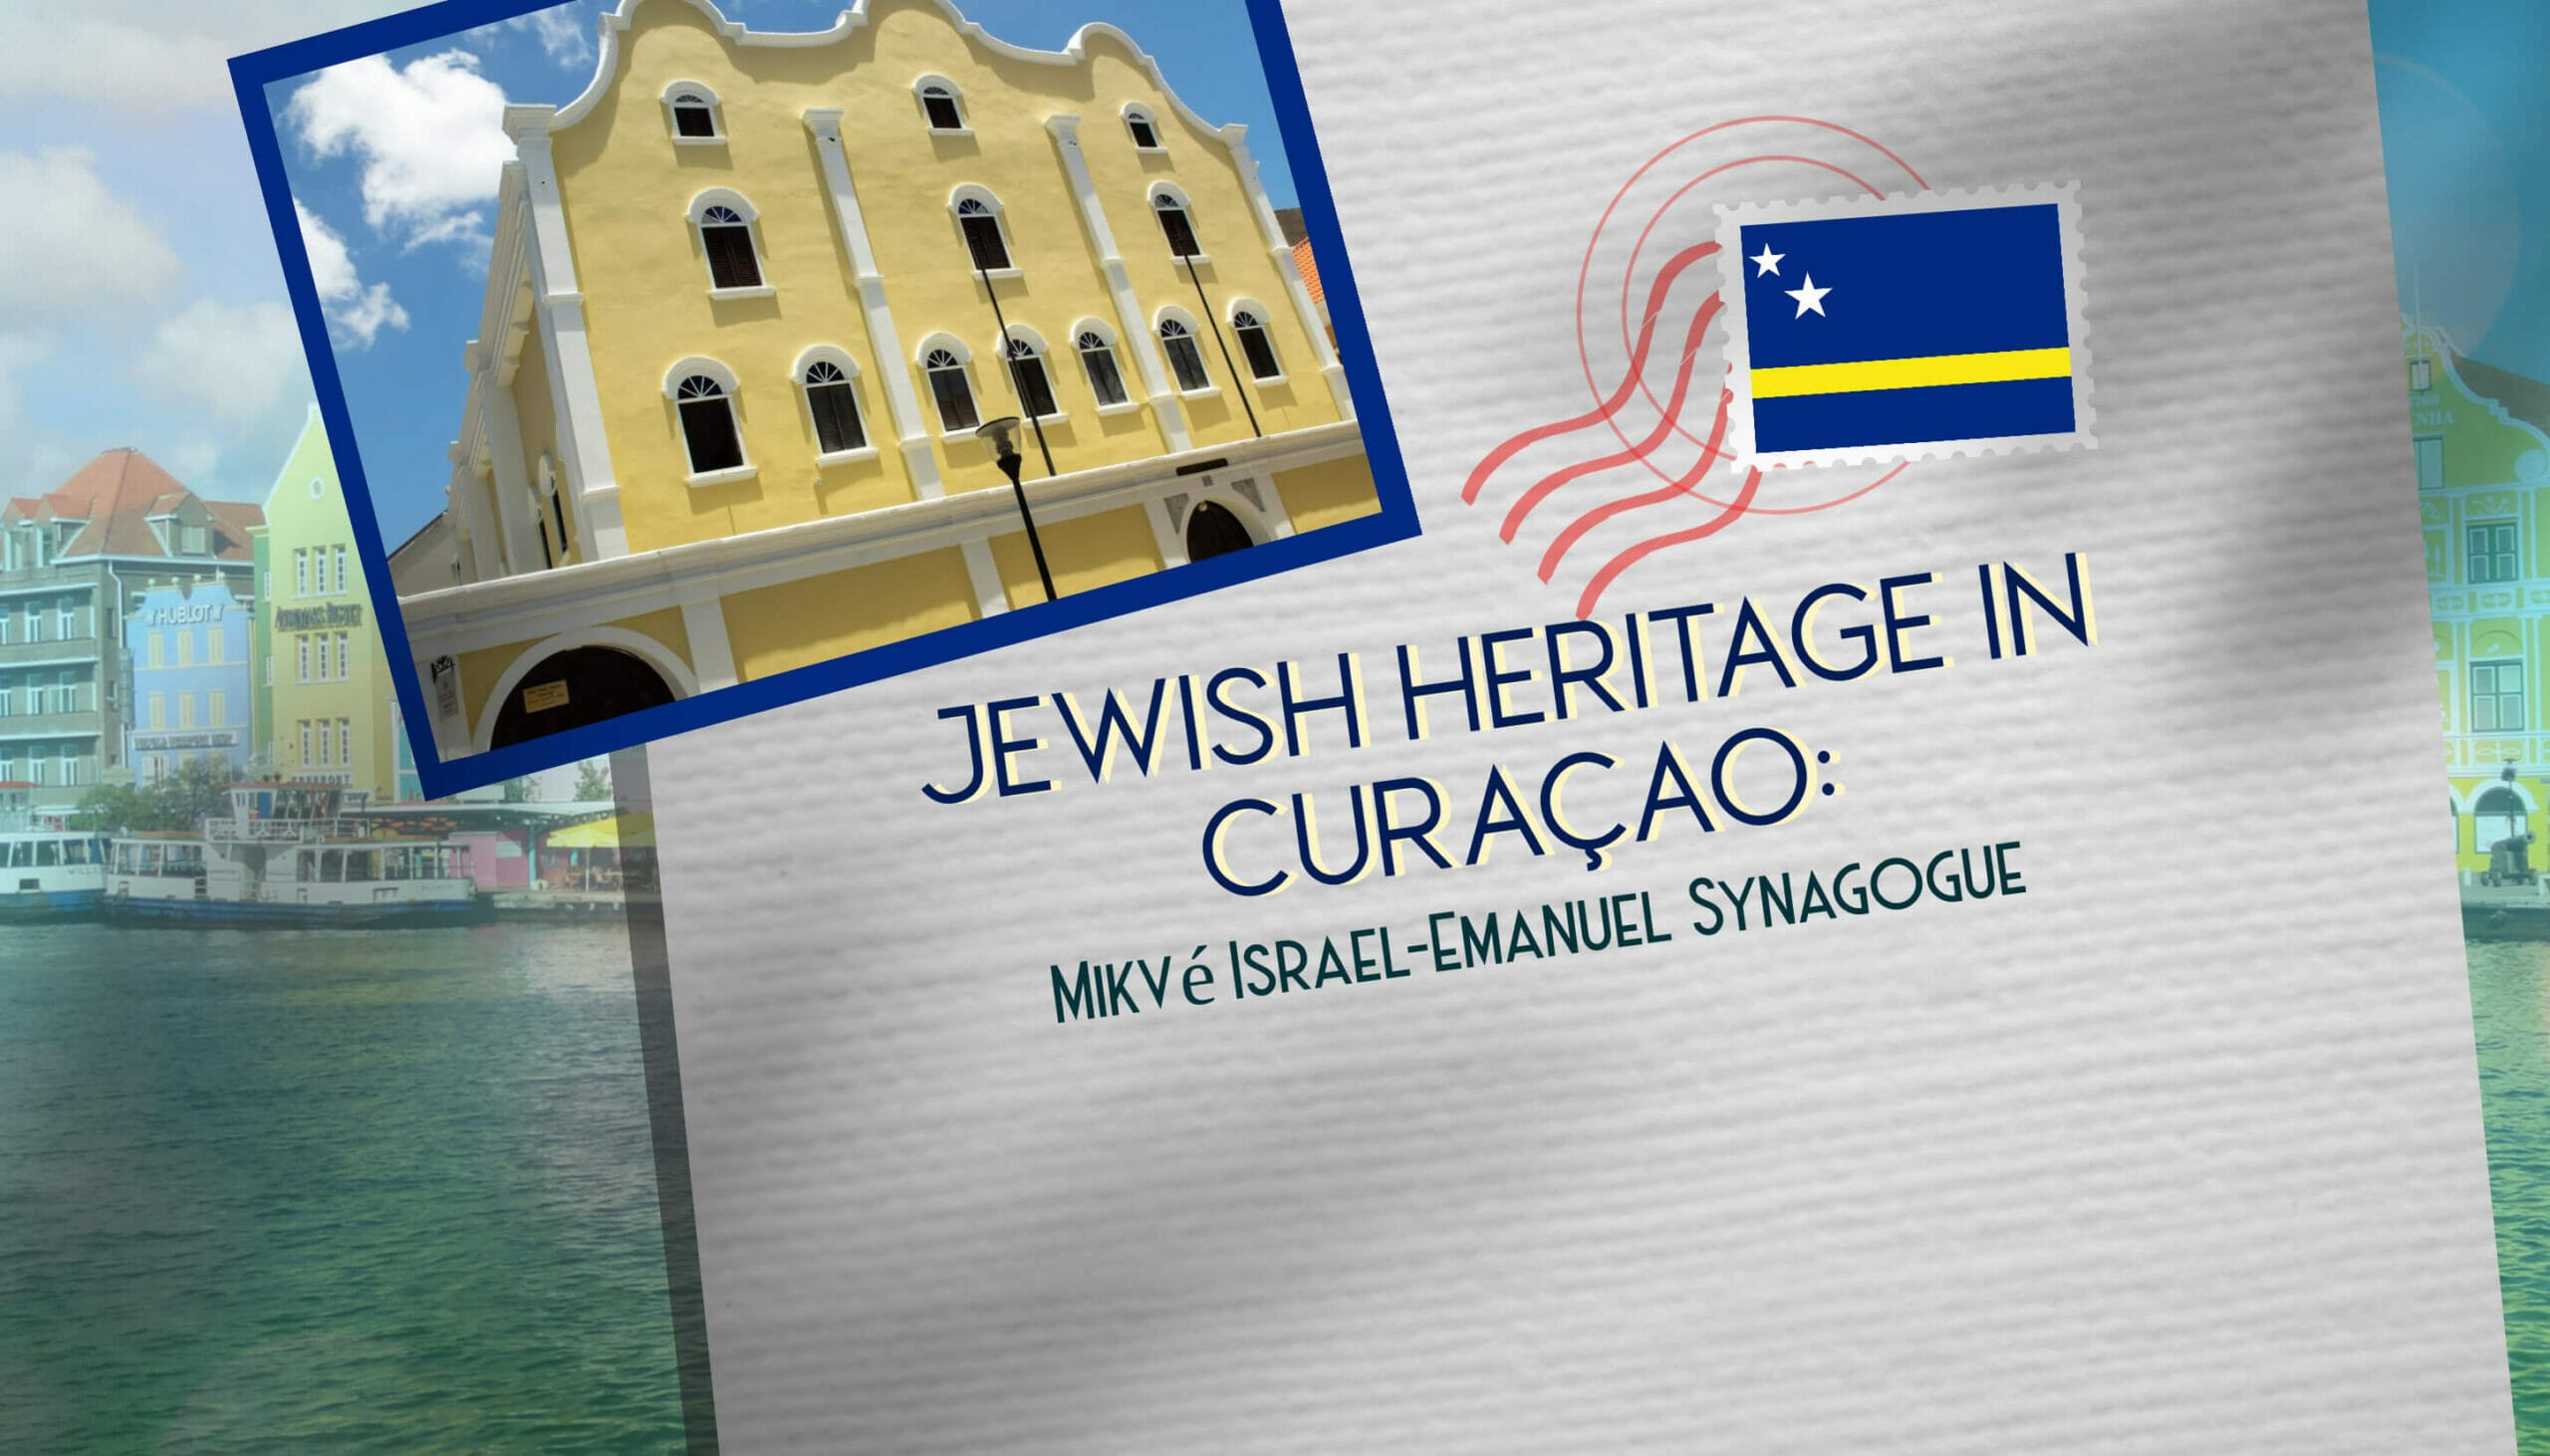 Jewish Heritage in Curaçao Mikvé Israel-Emanuel Synagogue